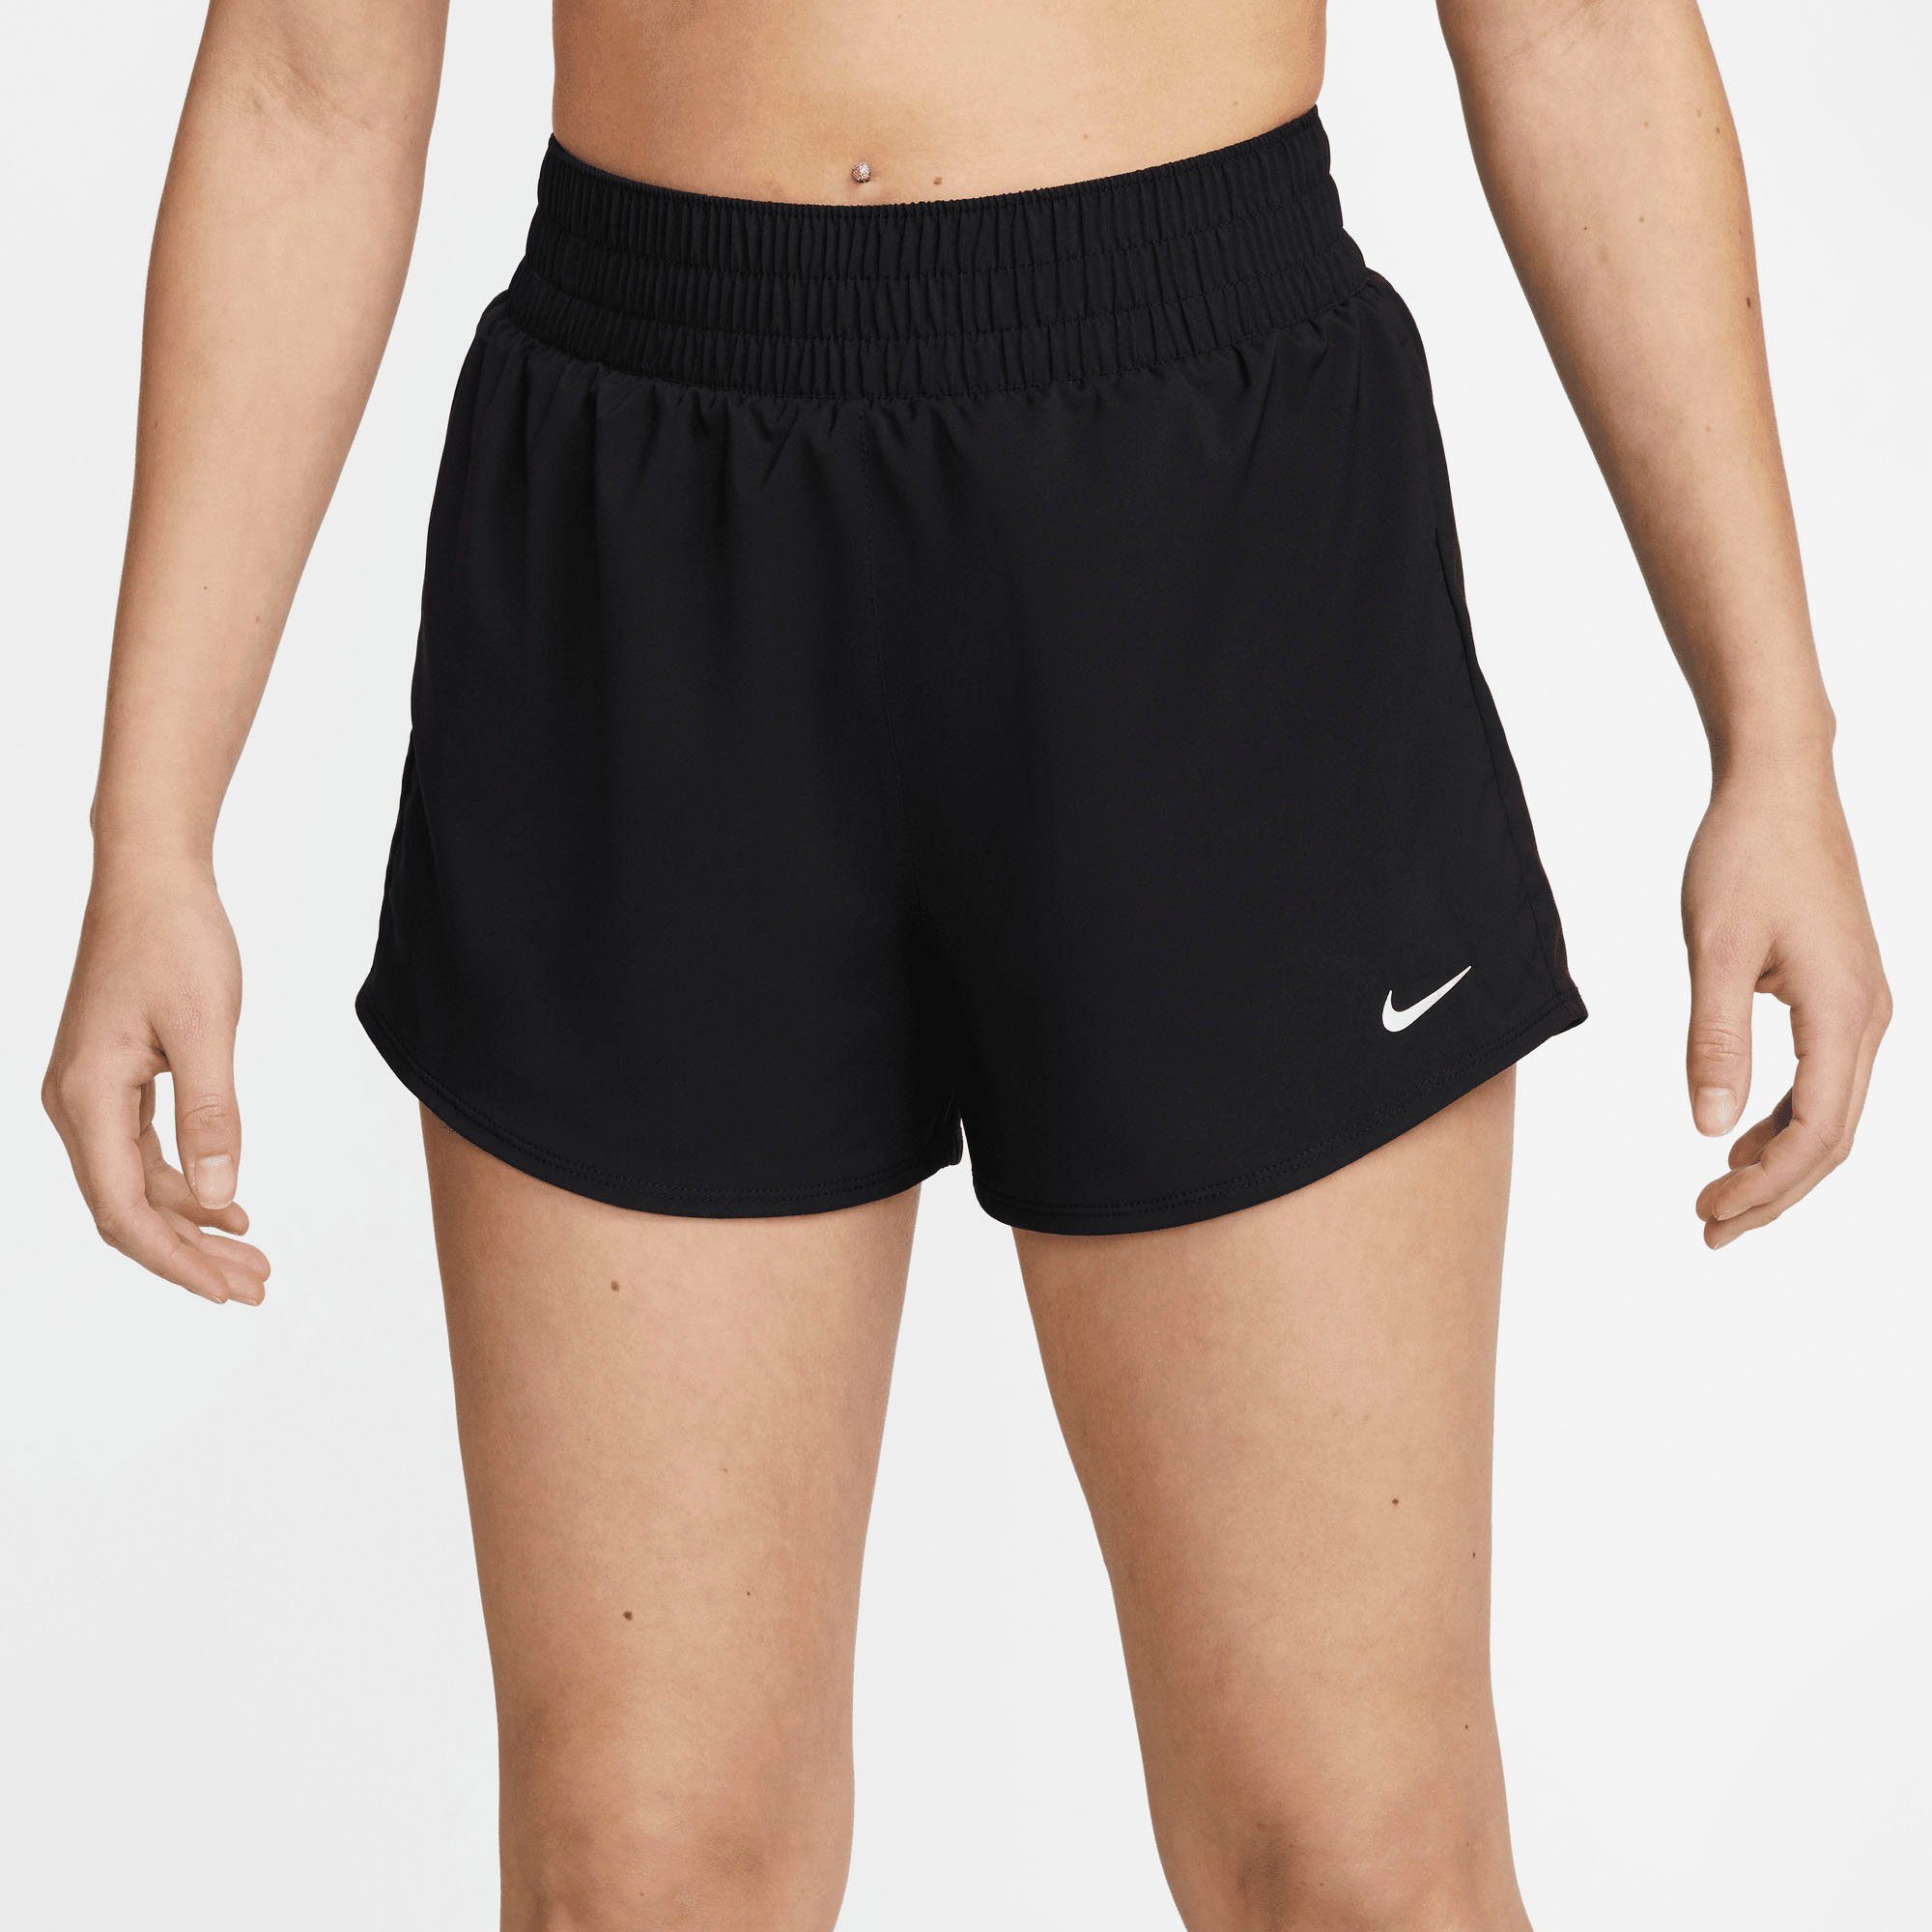 Nike -inch One Shorts Women's Dri-FIT Trainingsshorts High-Rise